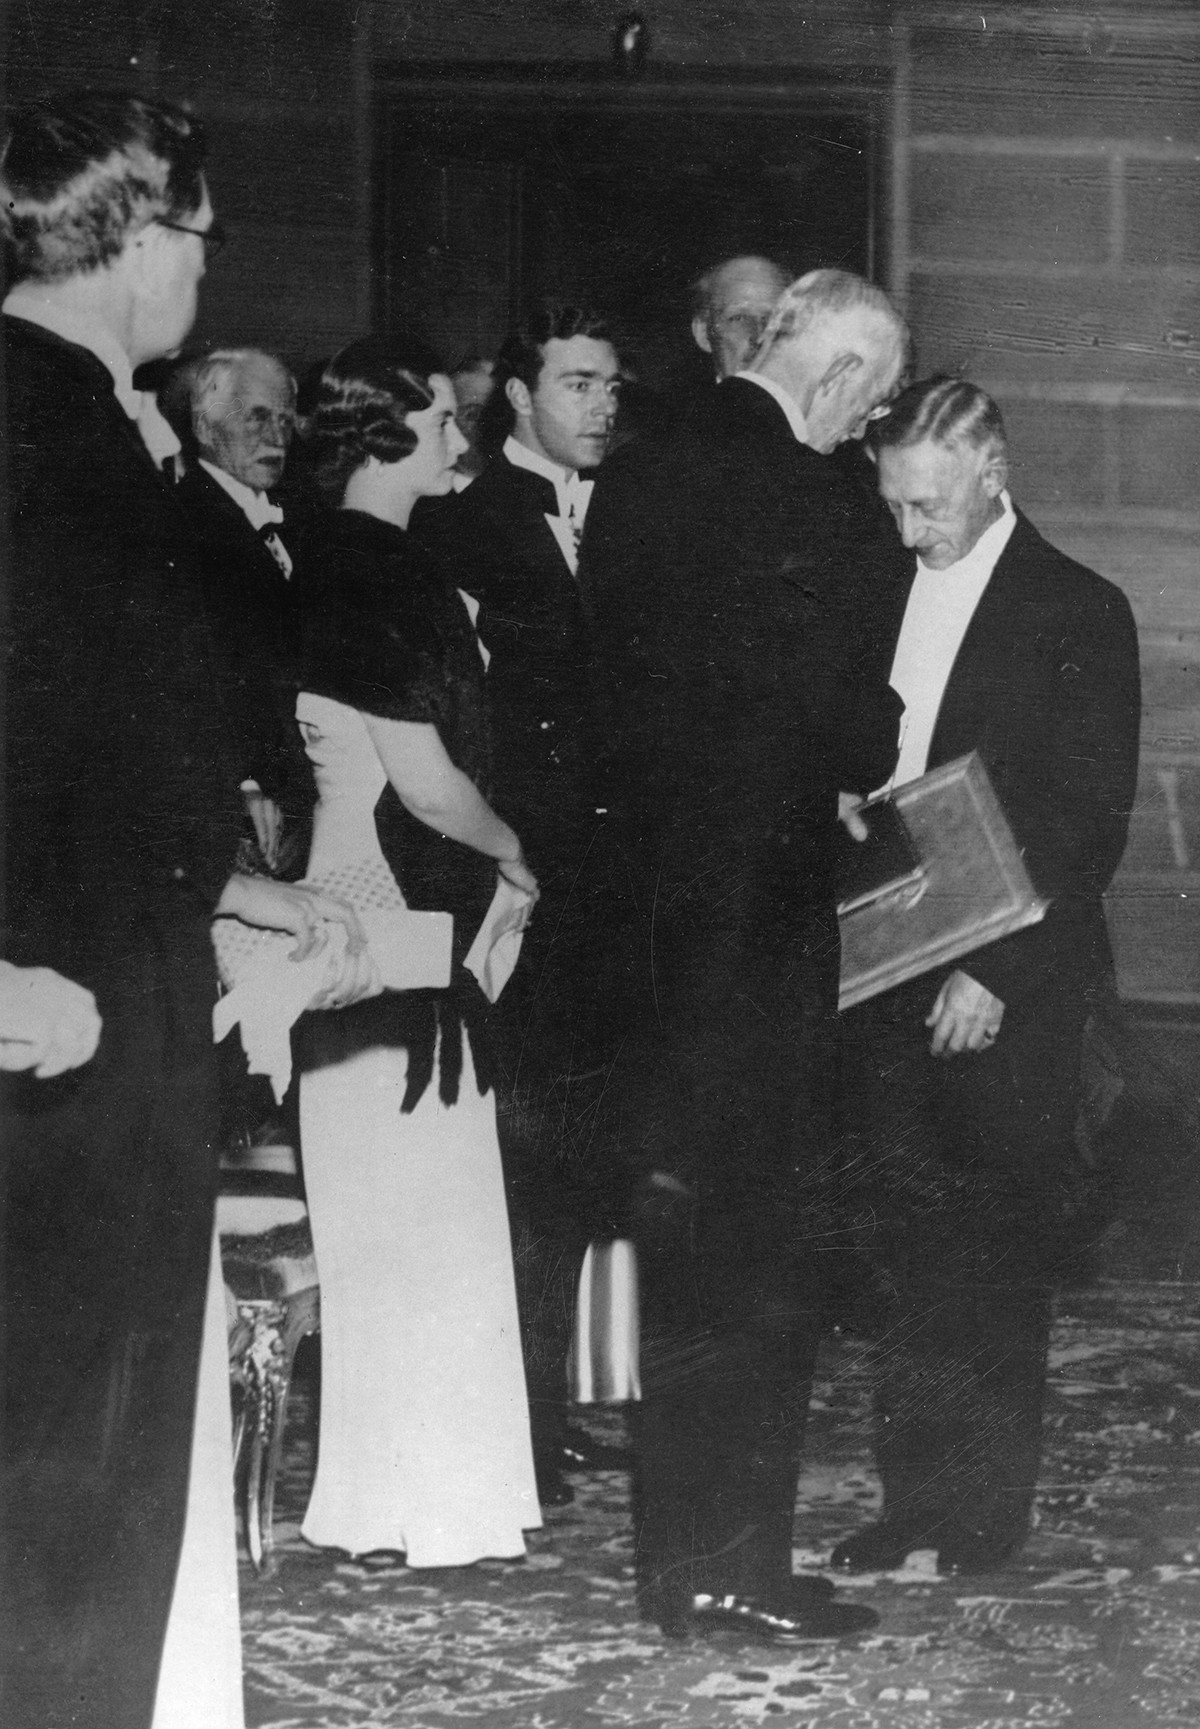 Ivan Bunin at the Nobel Prize awarding ceremony